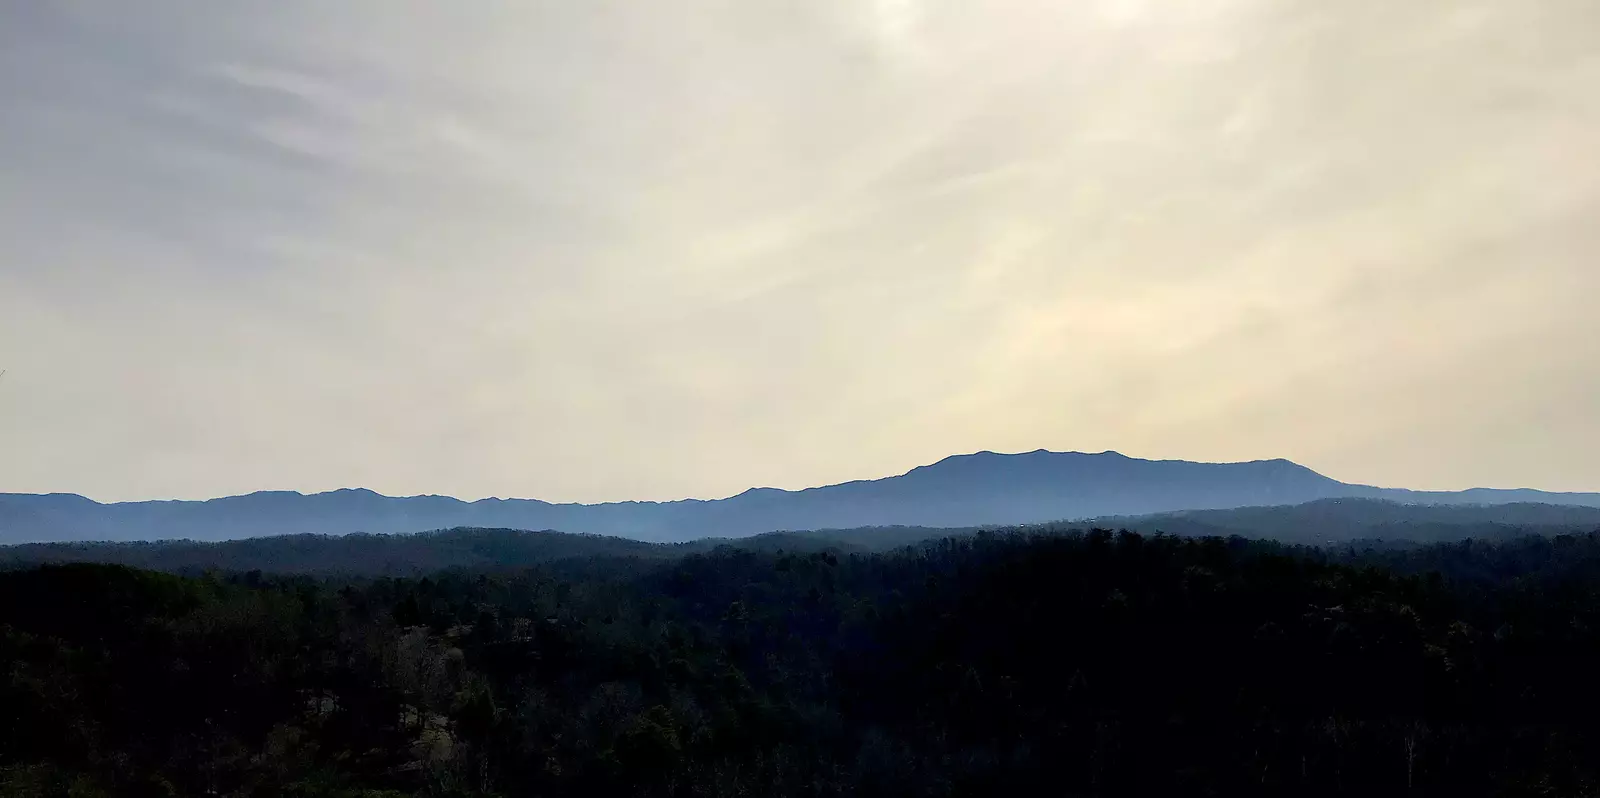 Smoky Mountain Retreat